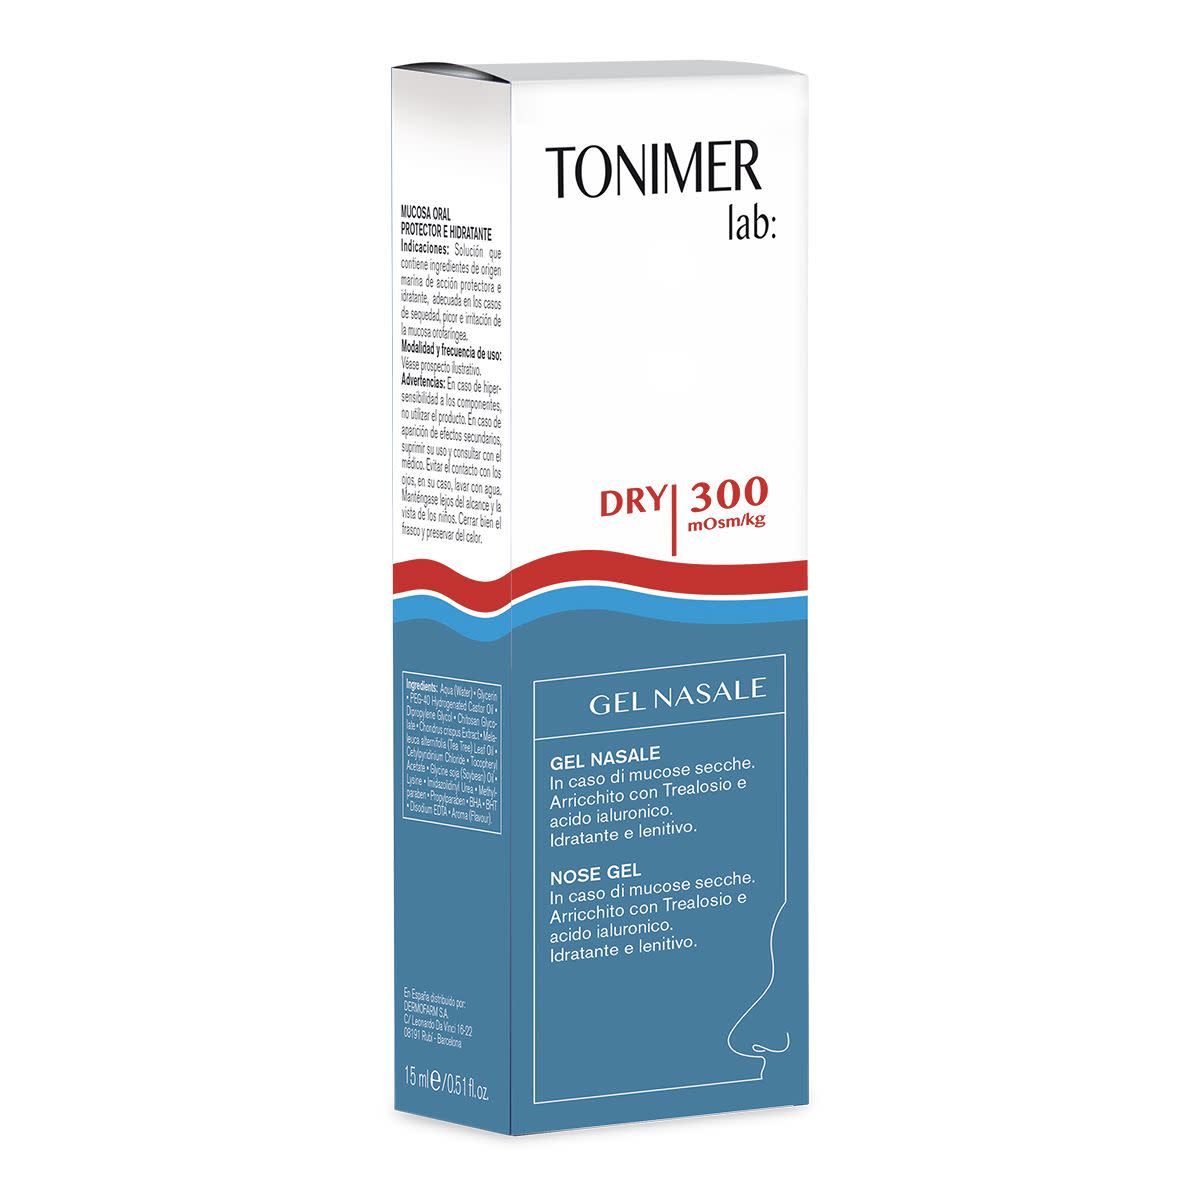 977661178 - Tonimer Lab Dry 300 Gel Nasale 15ml - 4702343_2.jpg